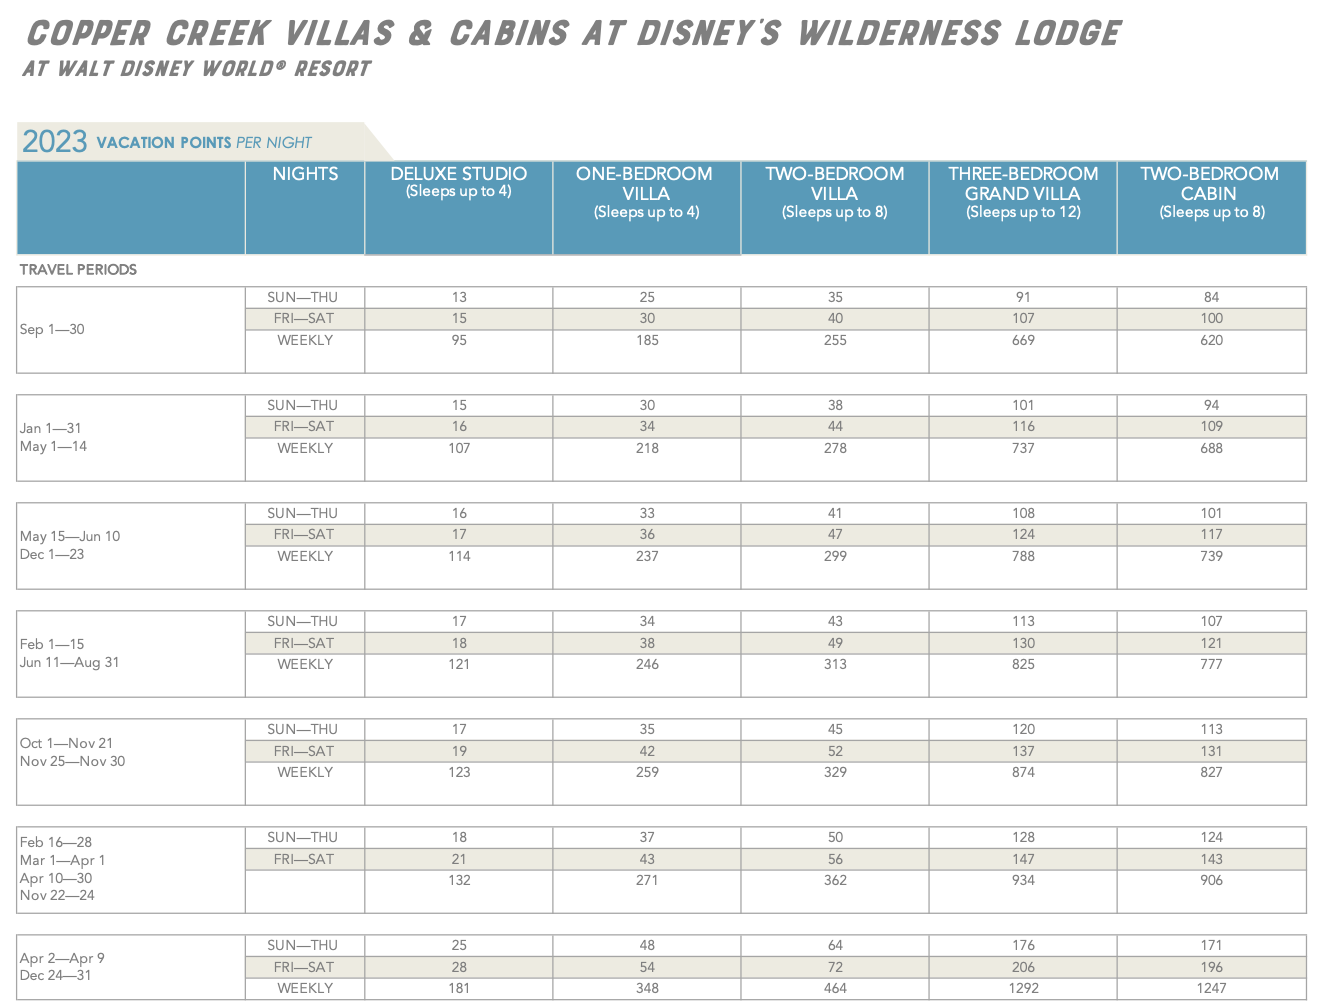 Copper Creek Point Chart 2023